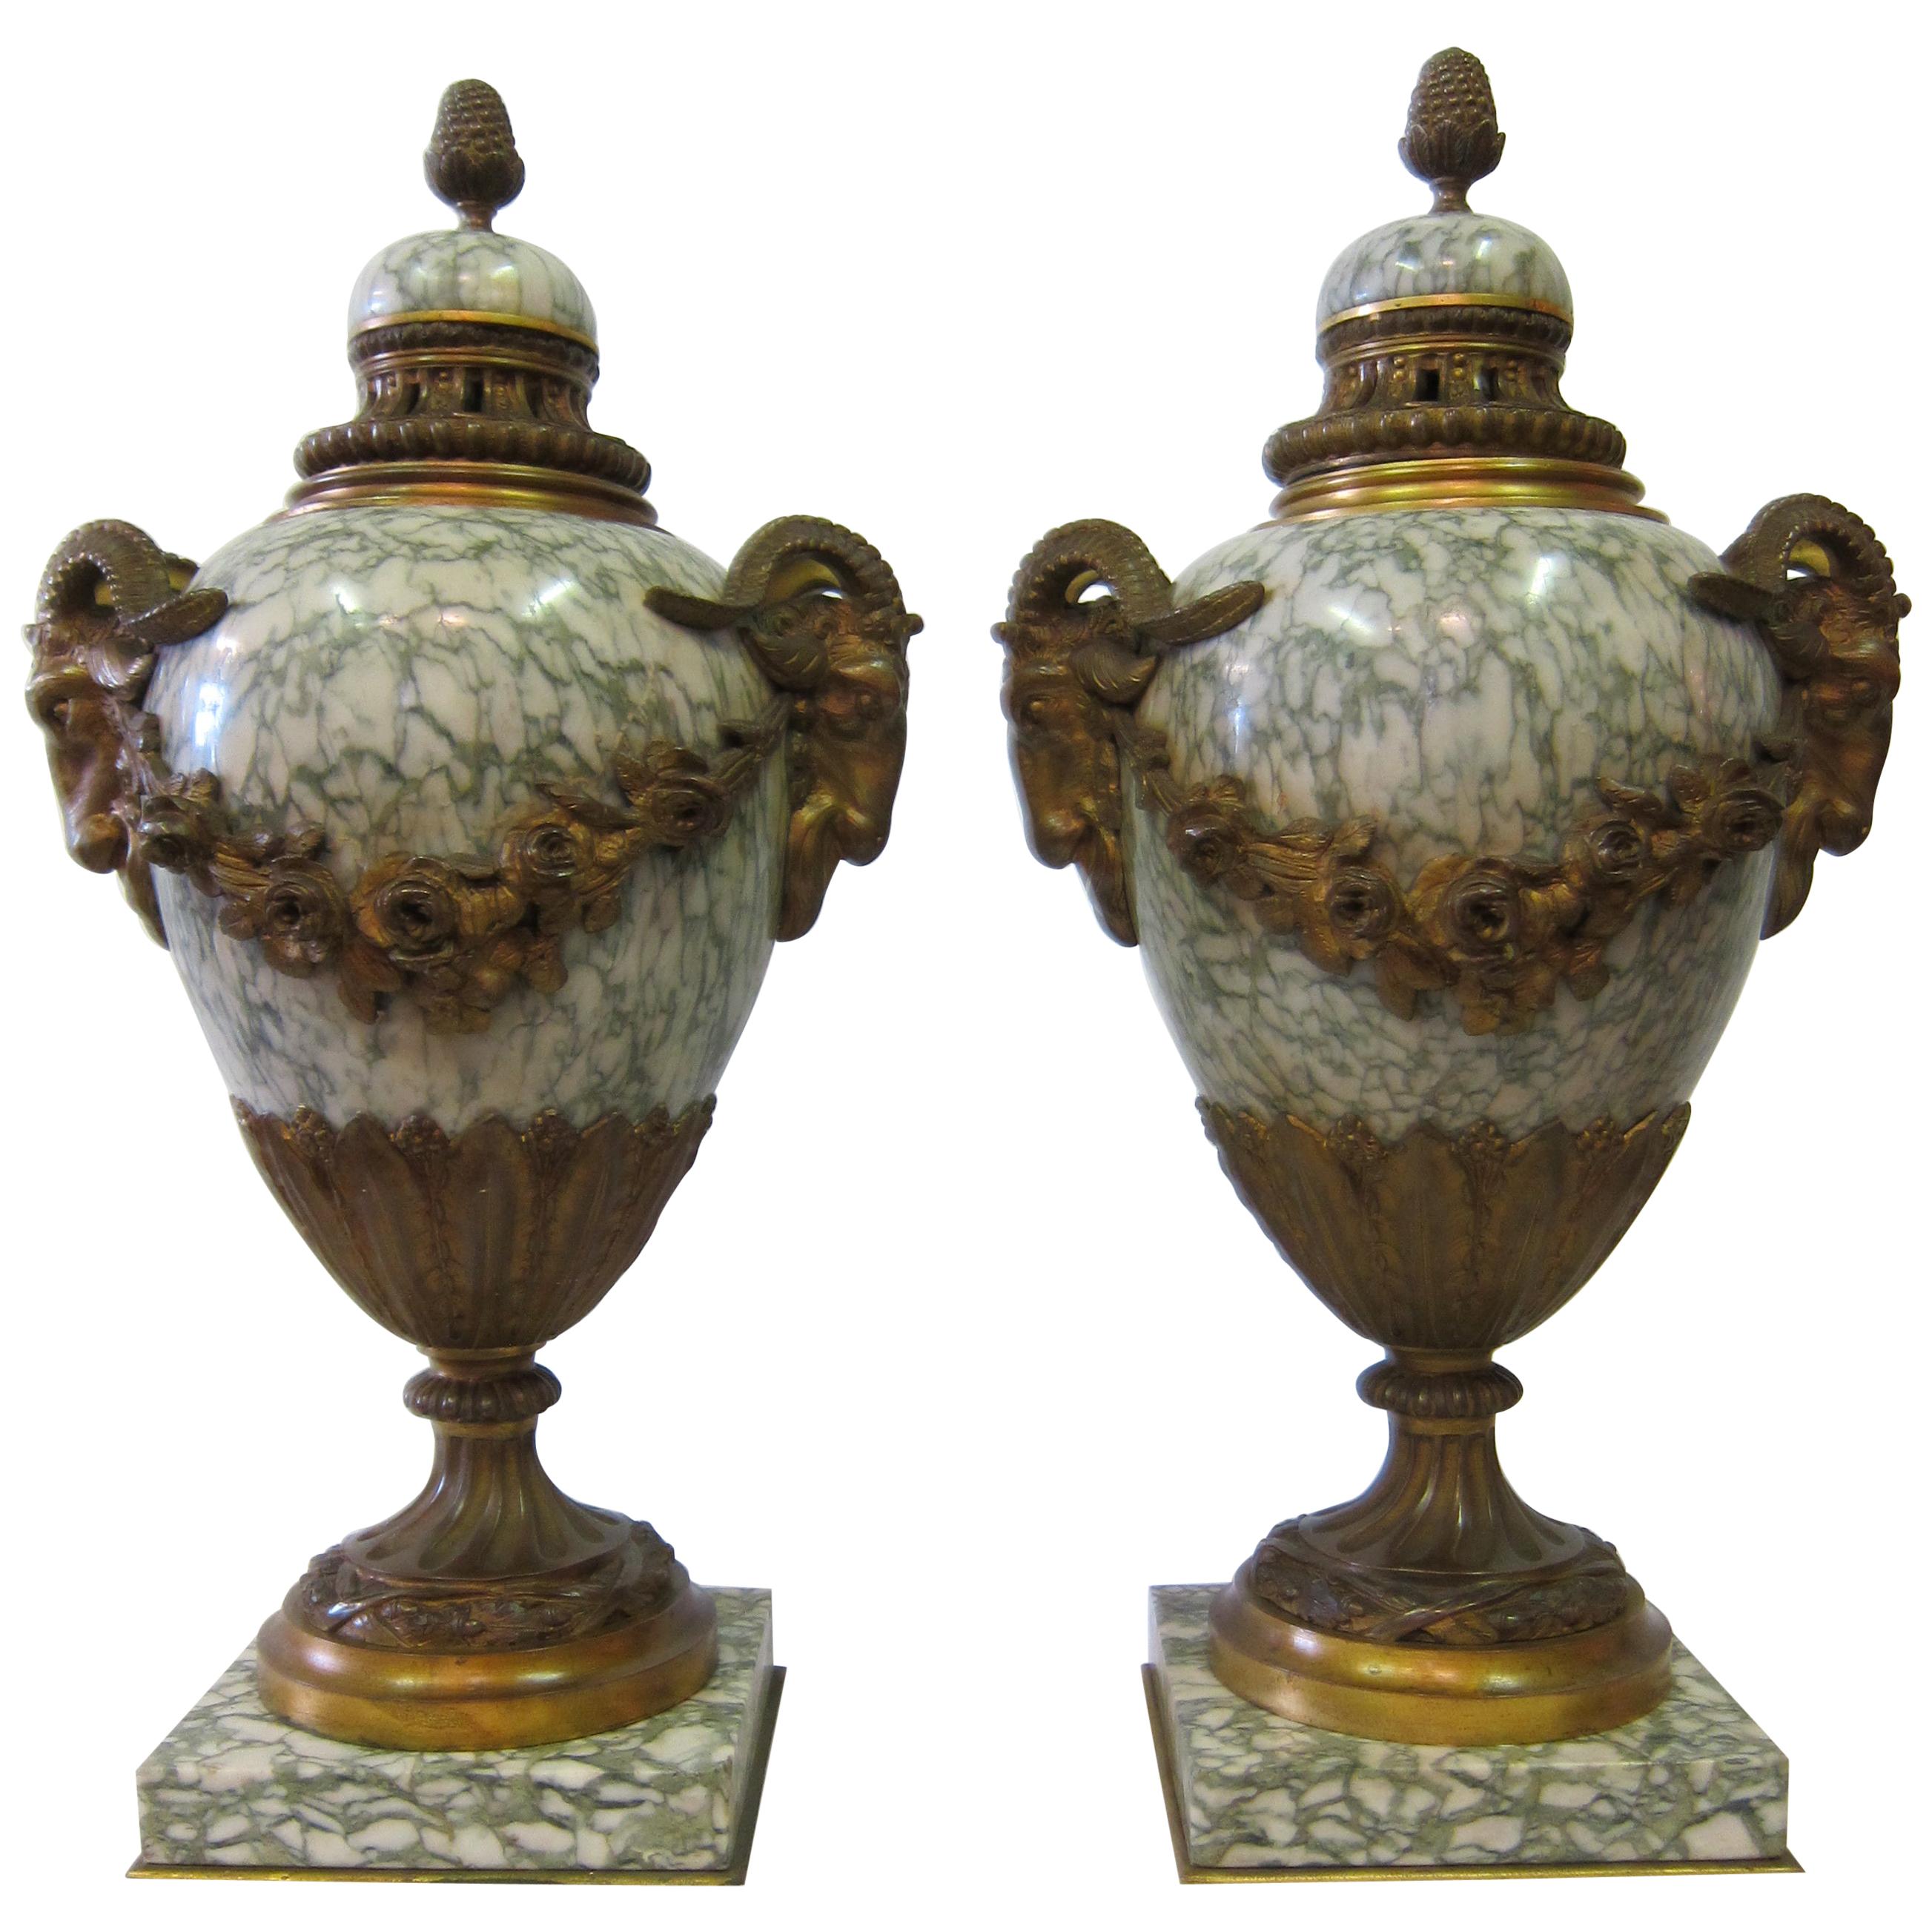 Pair of Vintage Empire & Ormolu Urns, circa 1860s